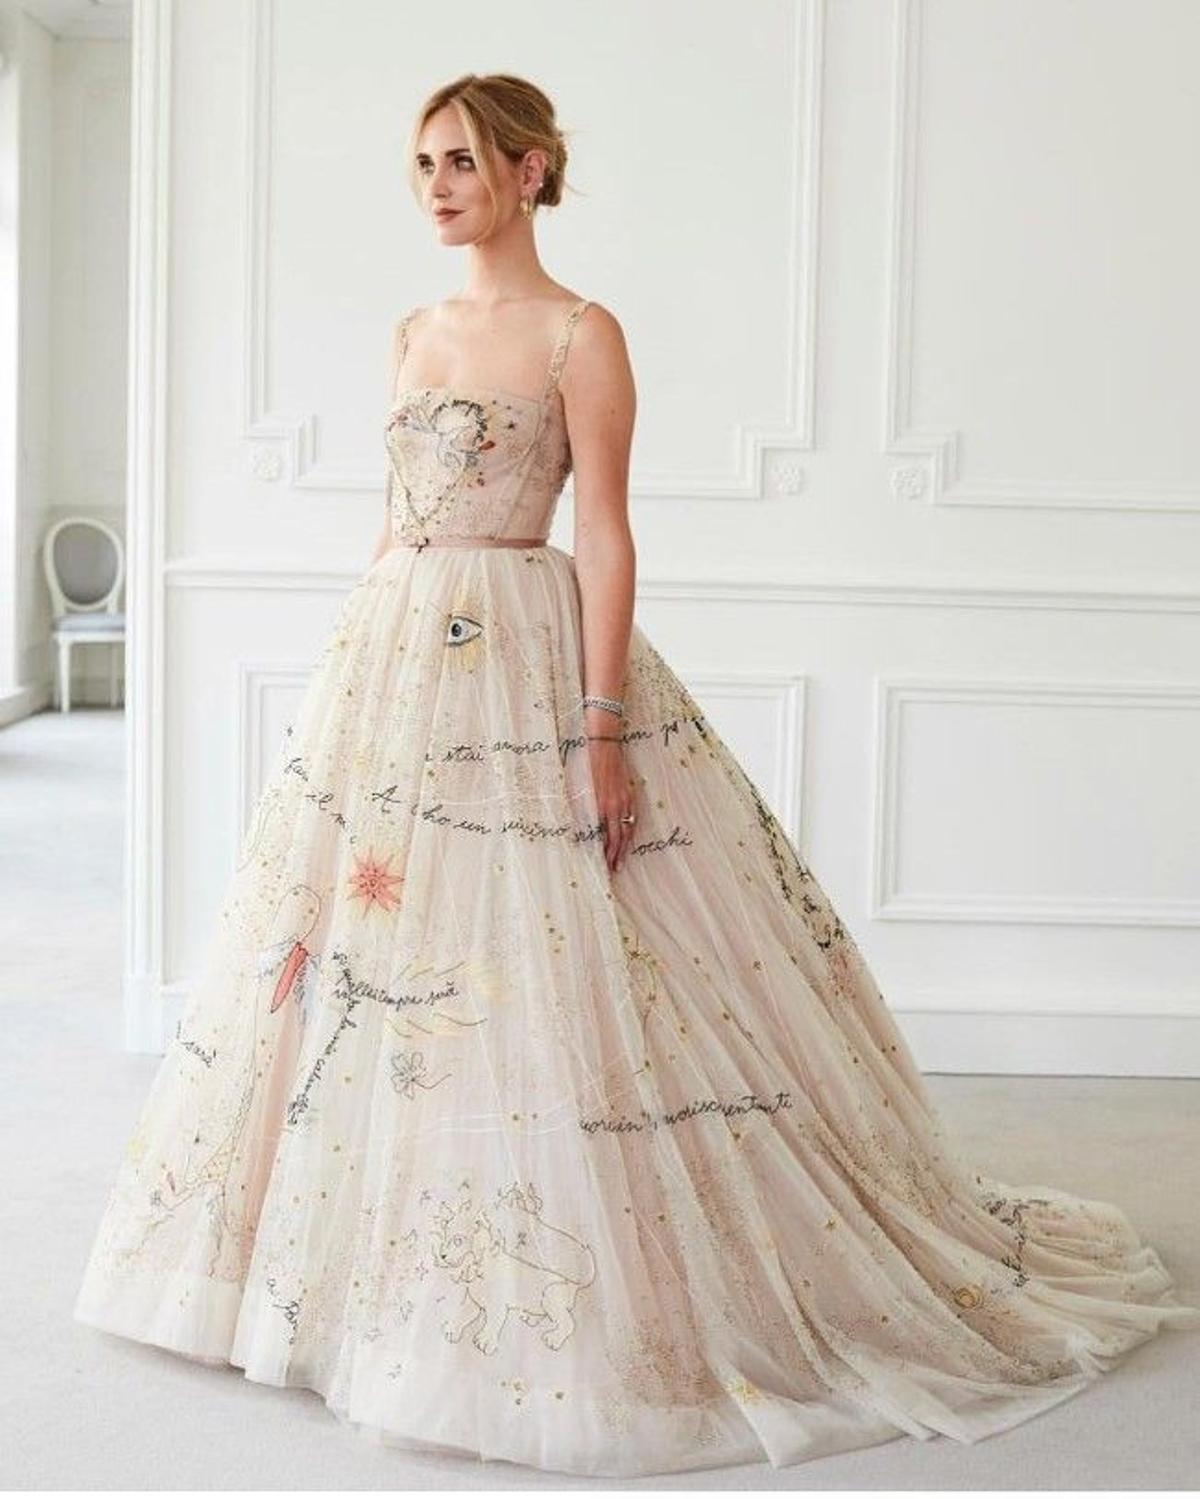 Chiara Ferragni con su segundo vestido de novia, de Dior